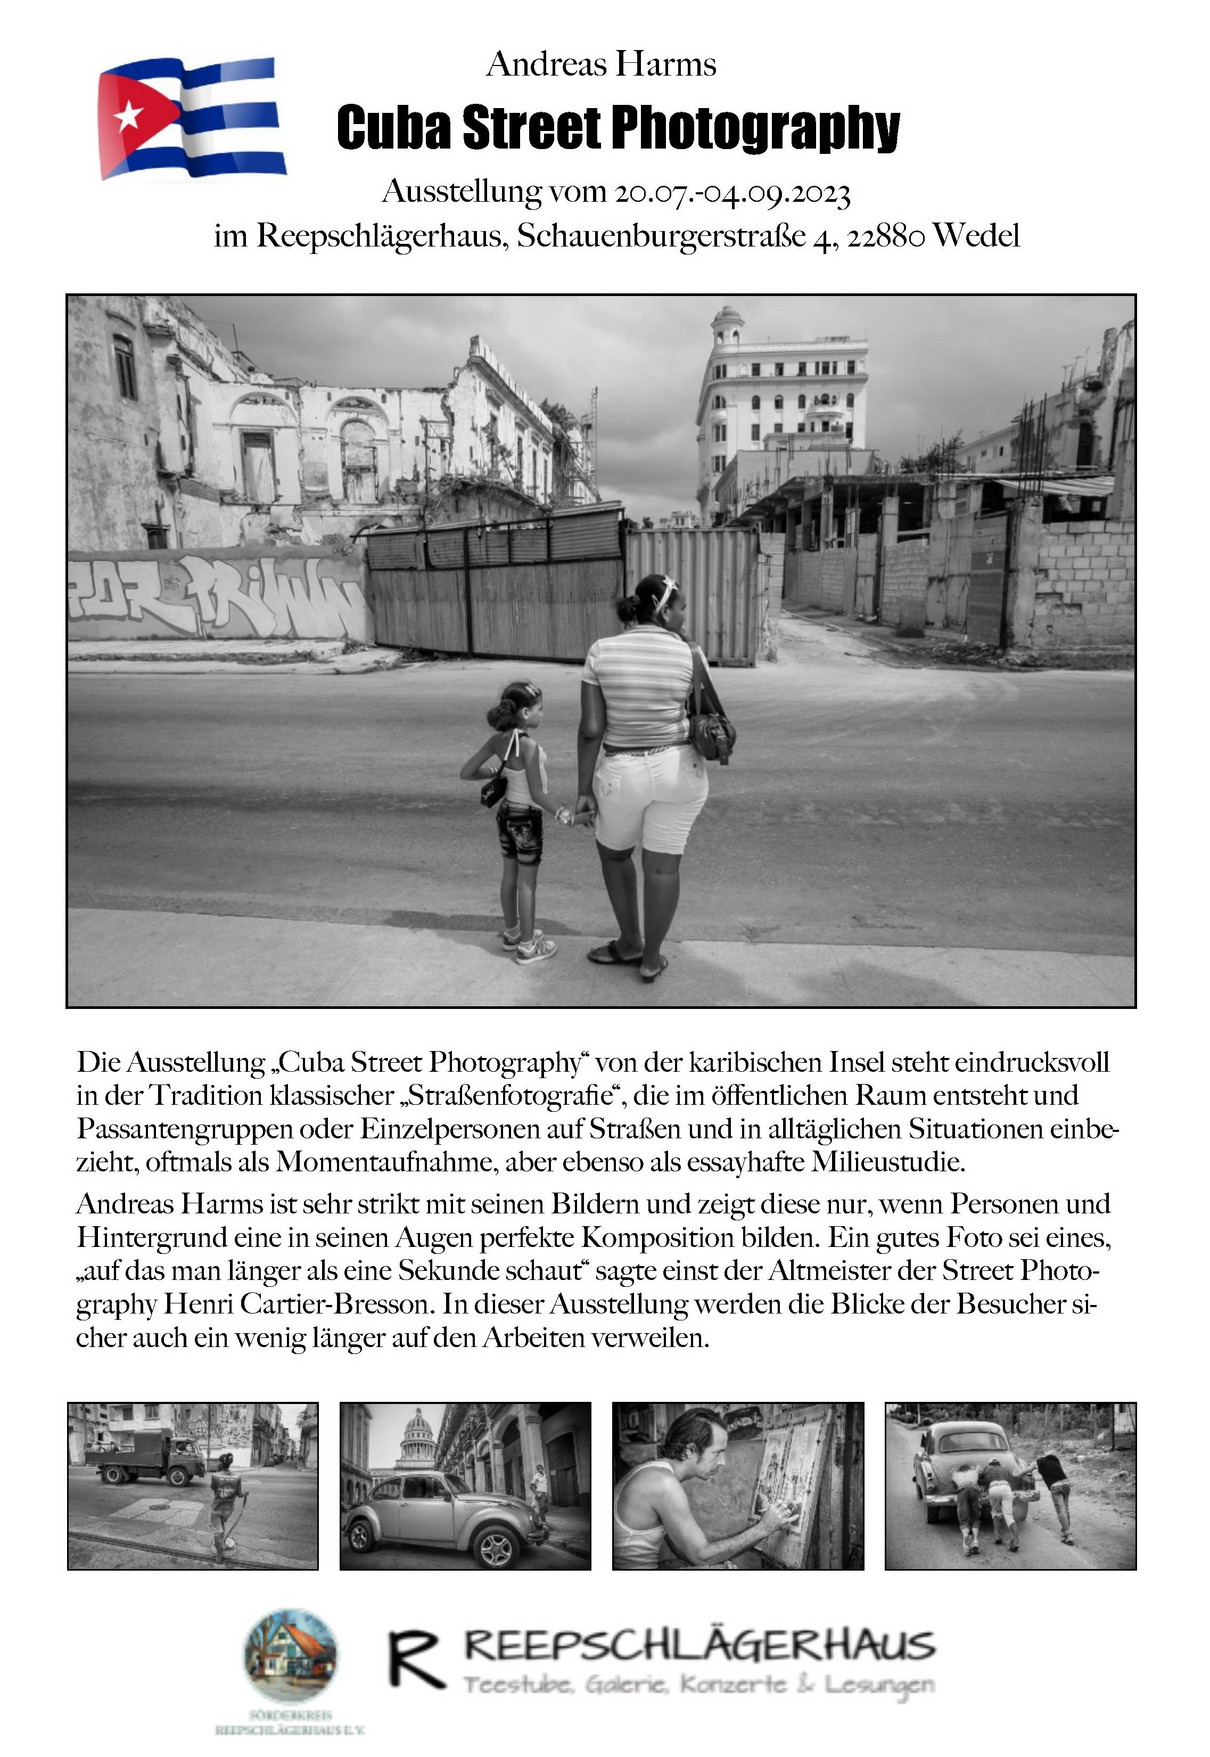 Cuba Street Photography - Andres Harms